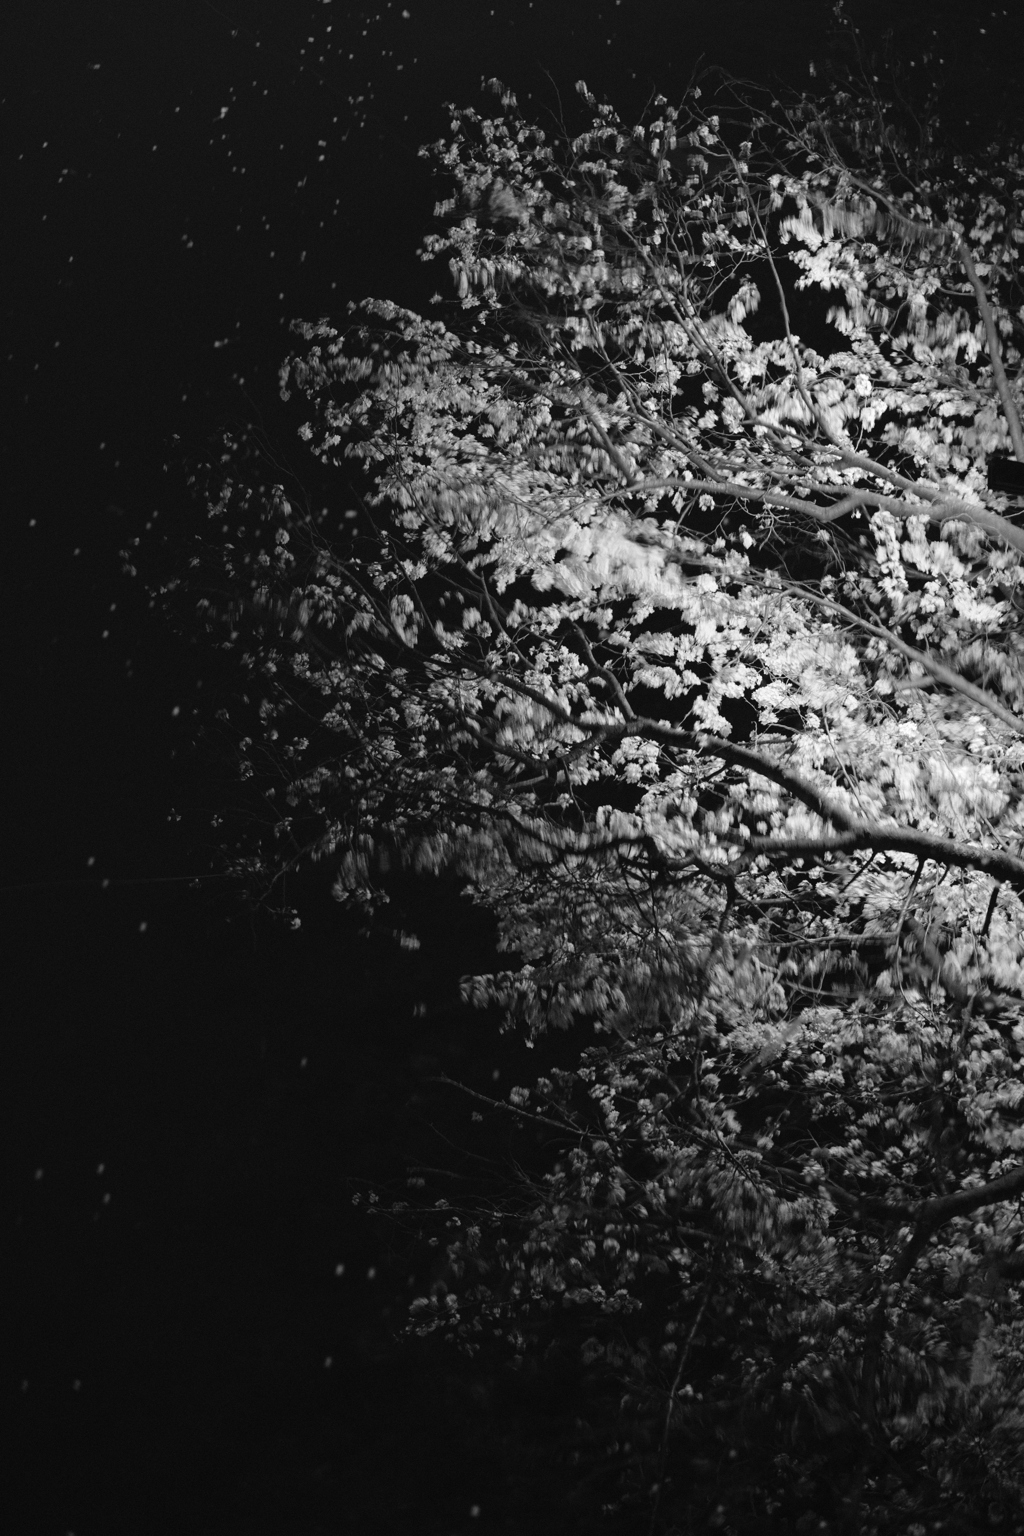 川面の夜桜